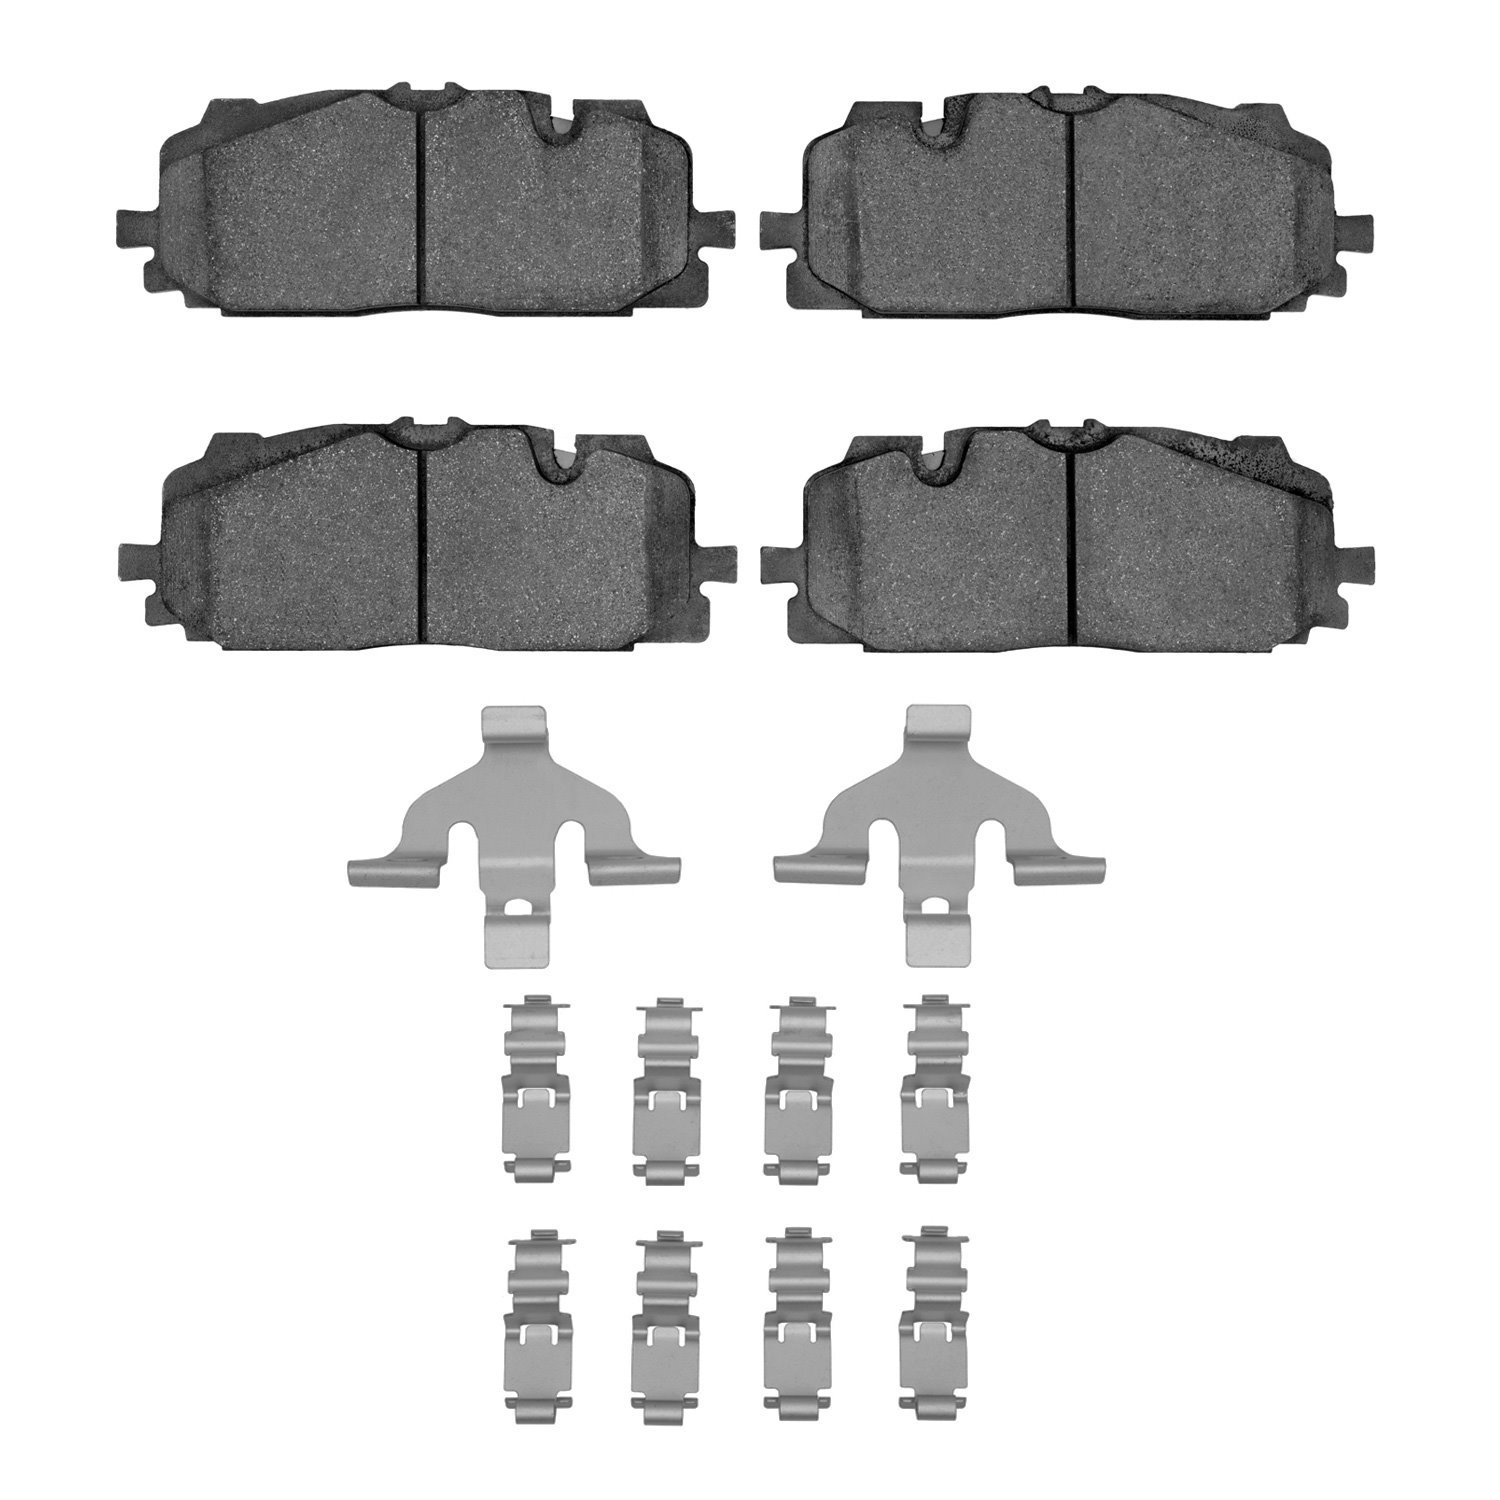 1310-1894-01 3000-Series Ceramic Brake Pads & Hardware Kit, Fits Select Audi/Volkswagen, Position: Front